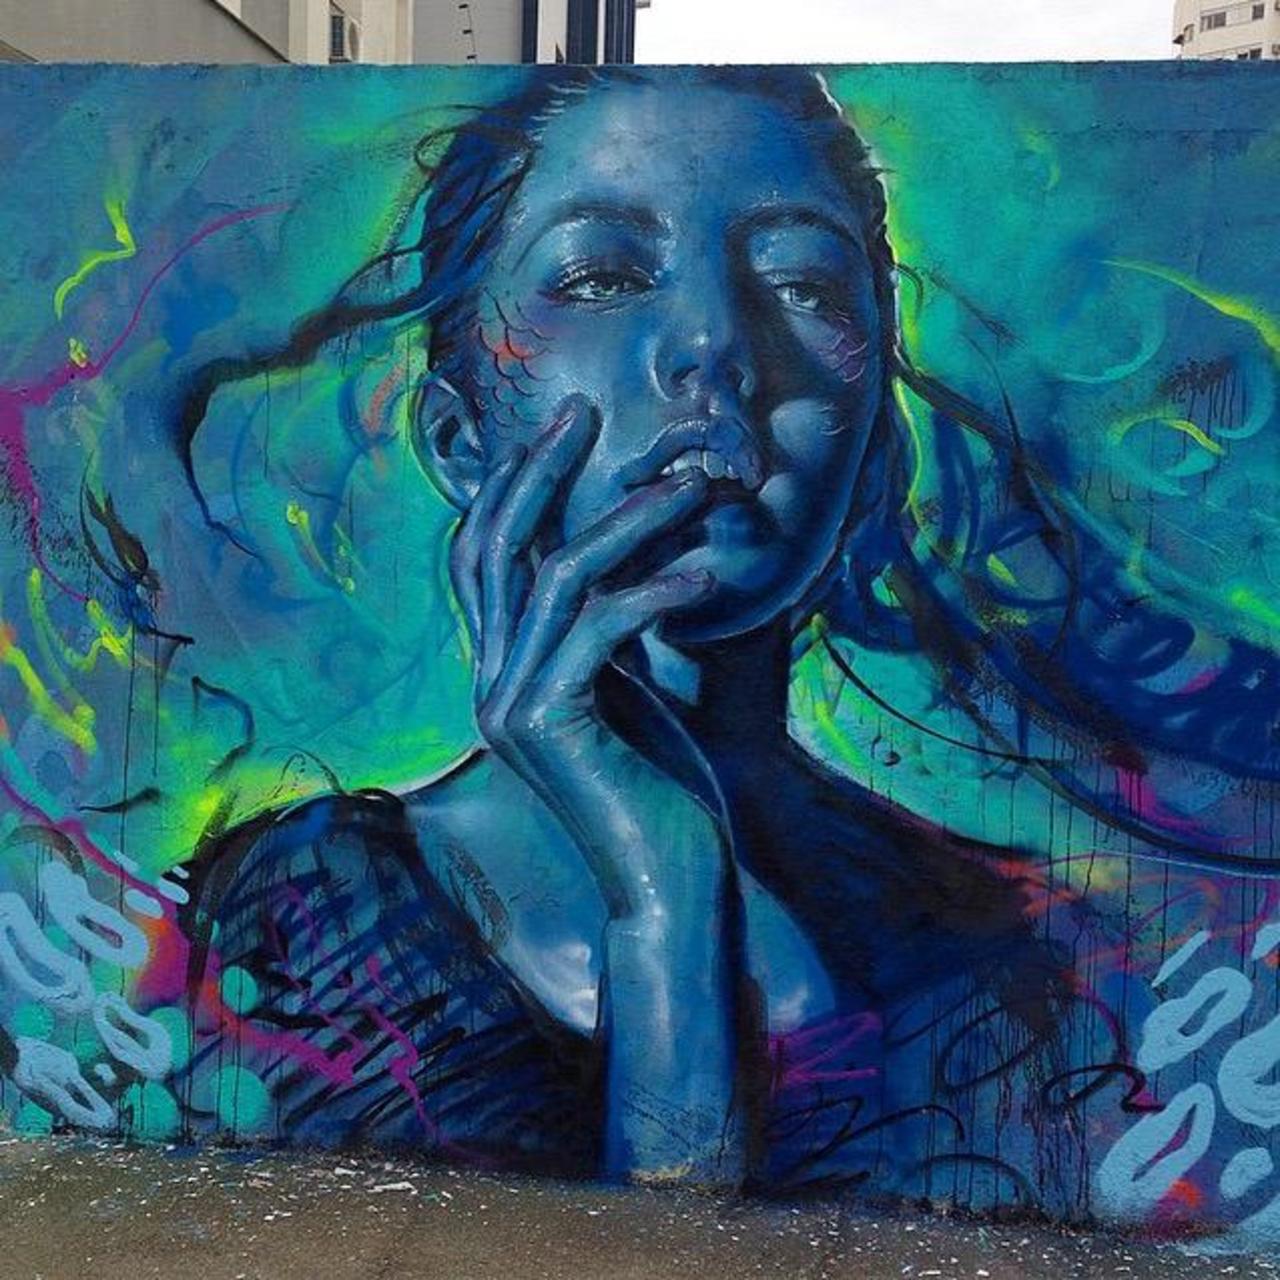 Thiago Valdi new Street Art piece titled 'Day Dreamer'

#art #mural #graffiti #streetart http://t.co/Yuxfeaqj9p